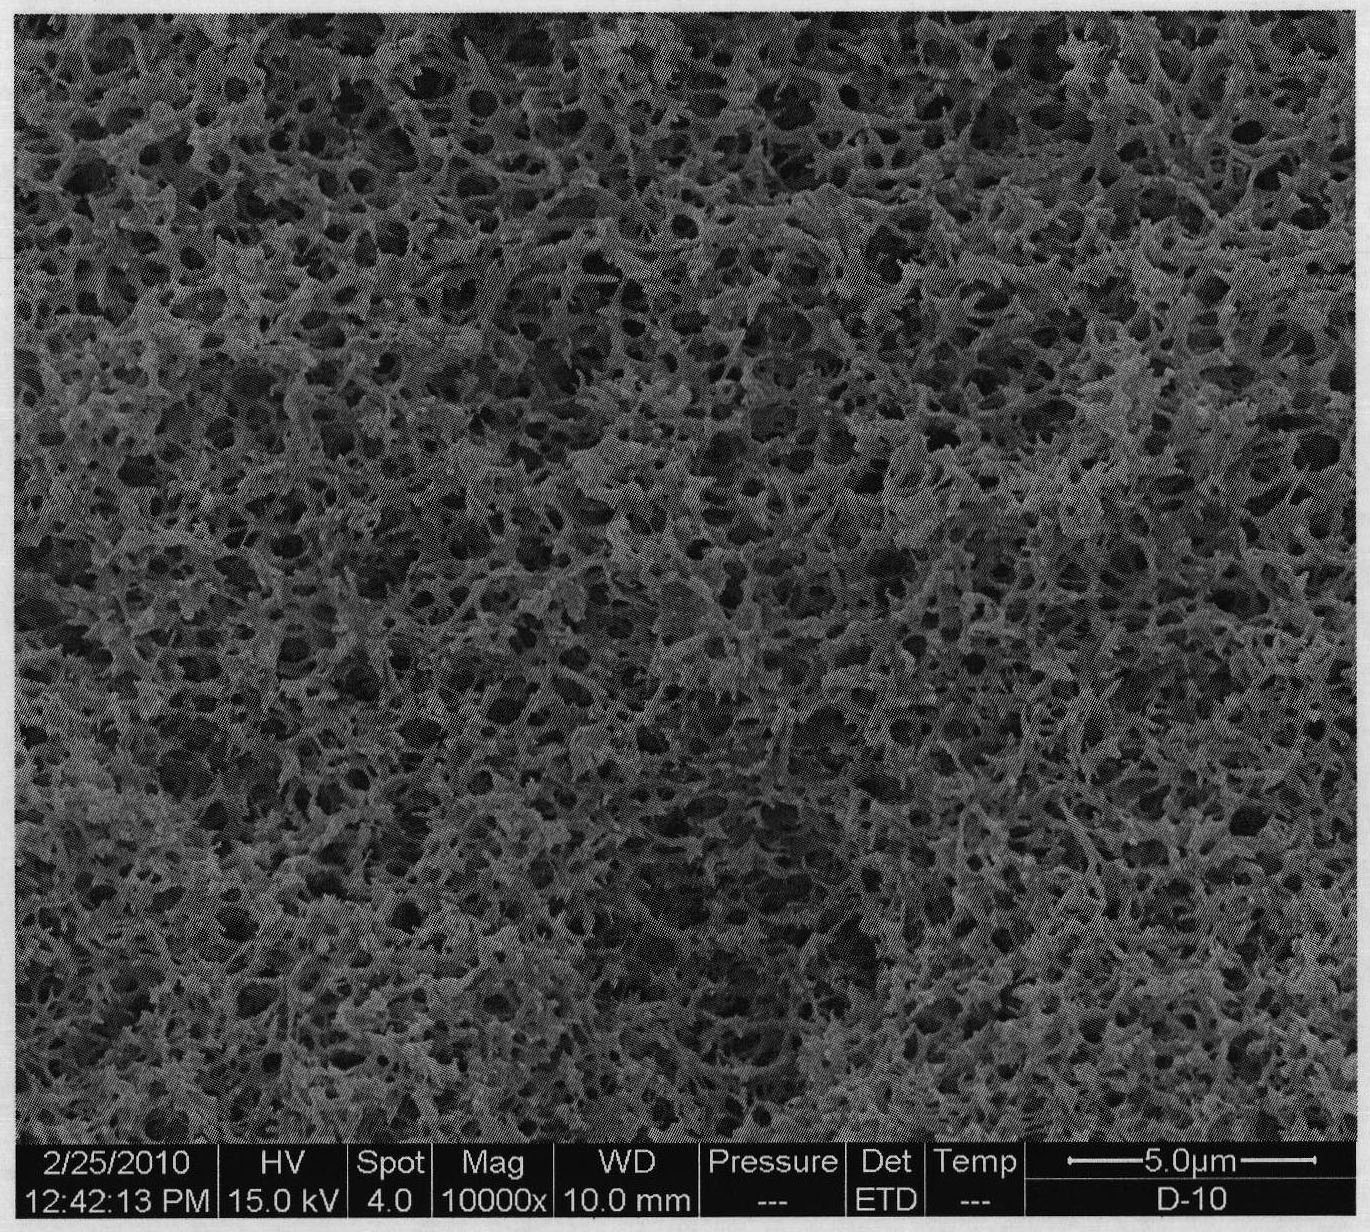 Hollow-fiber membrane with density gradient pores and preparation method